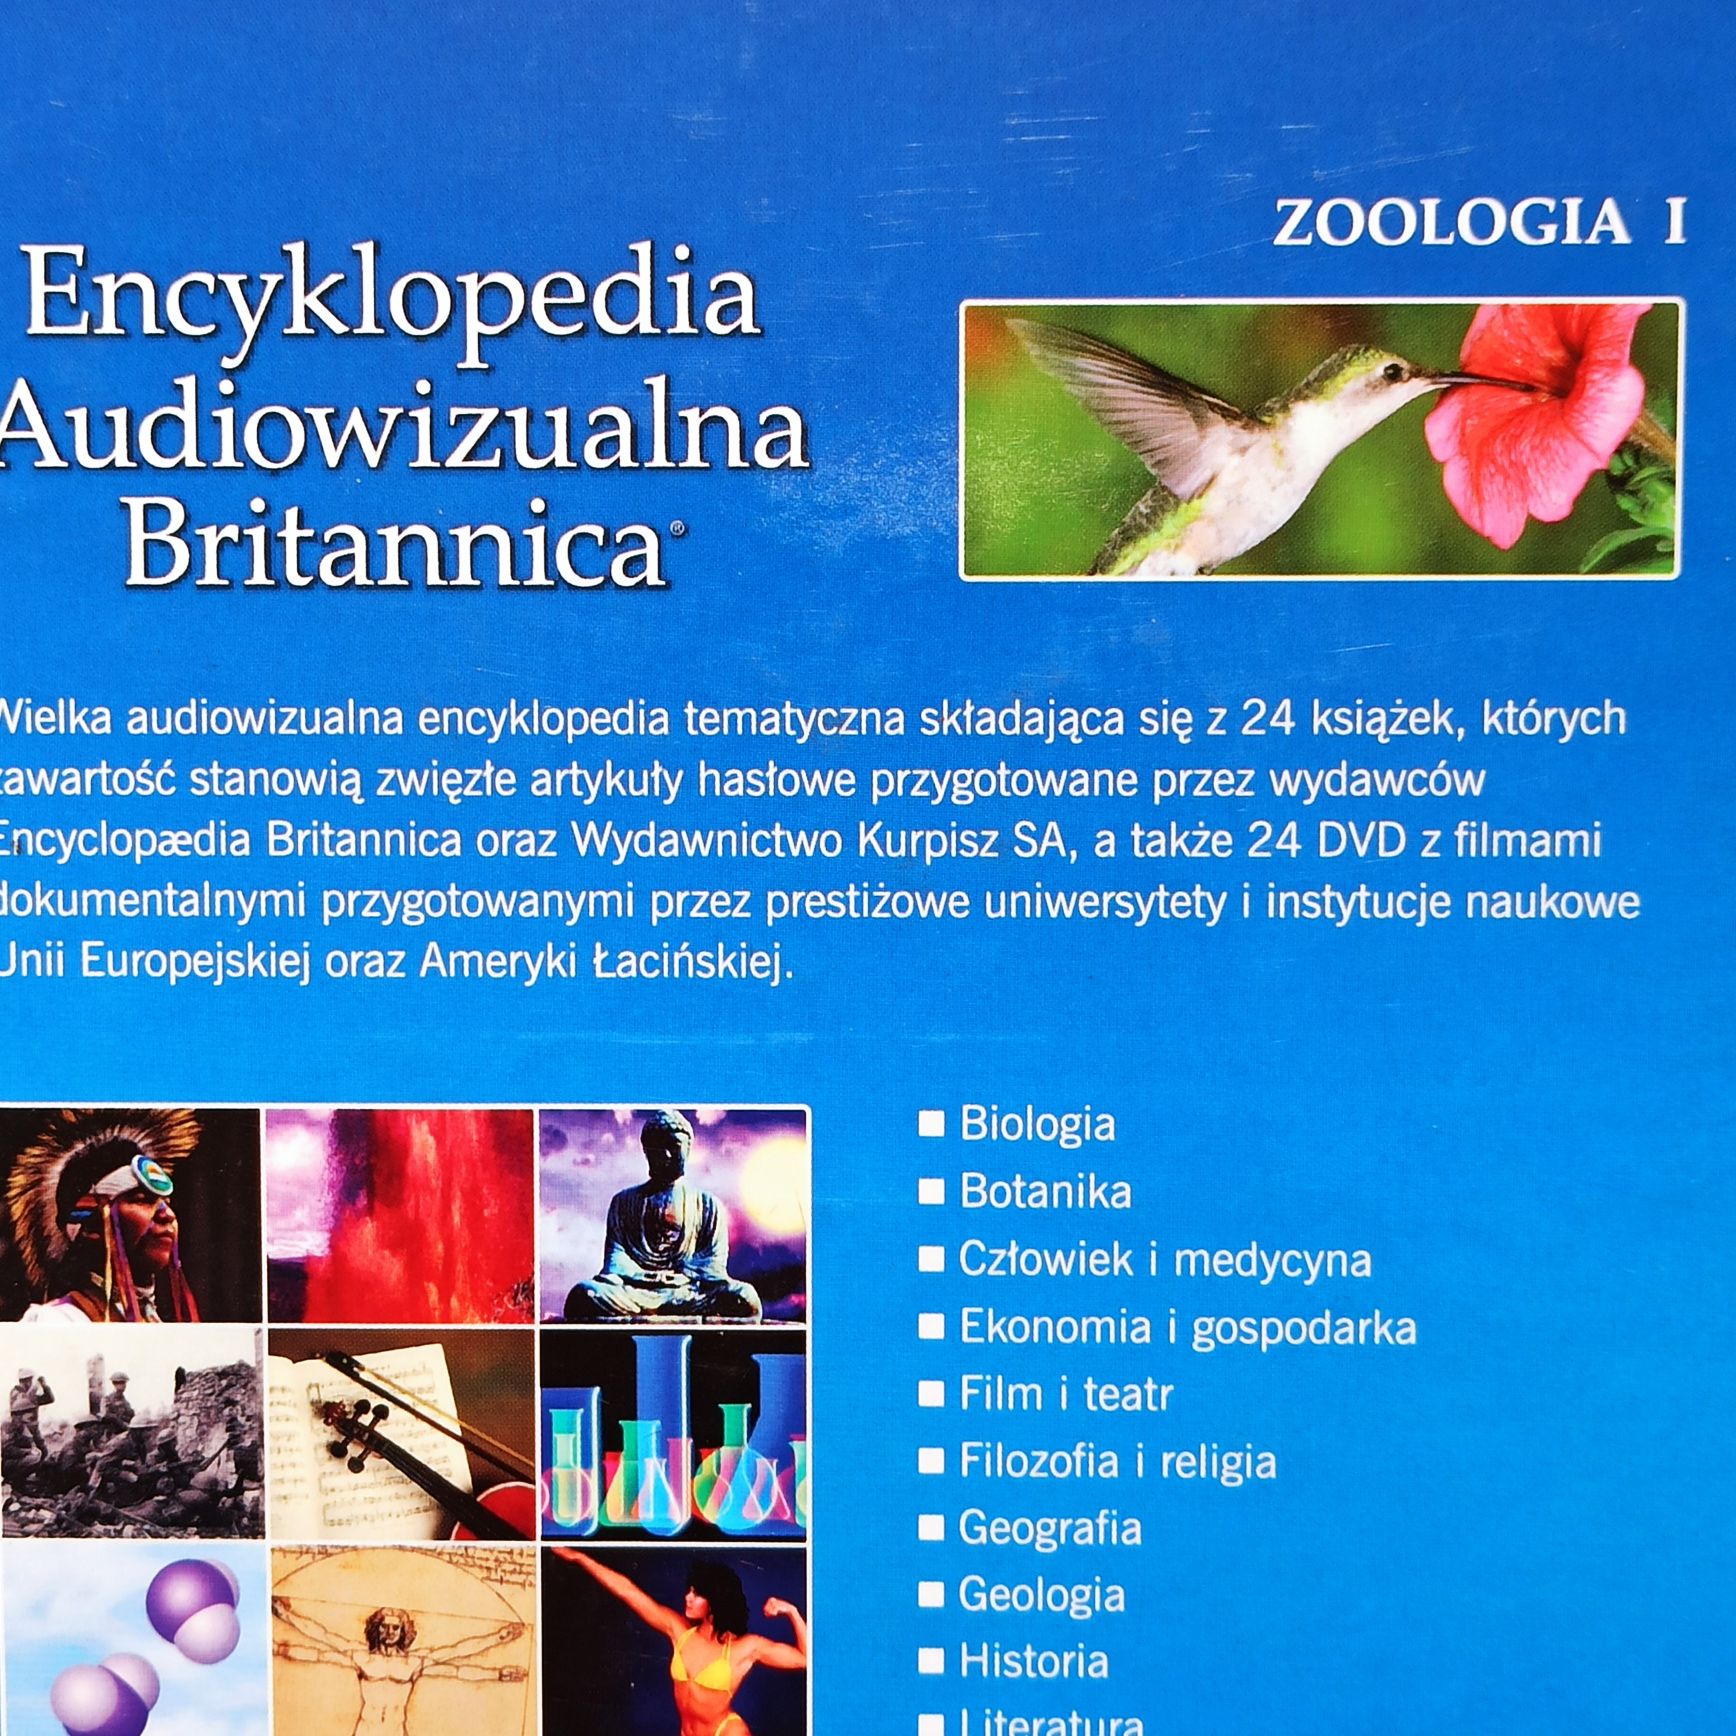 Encyklopedia Audiowizualna Britannica - Zoologia I.